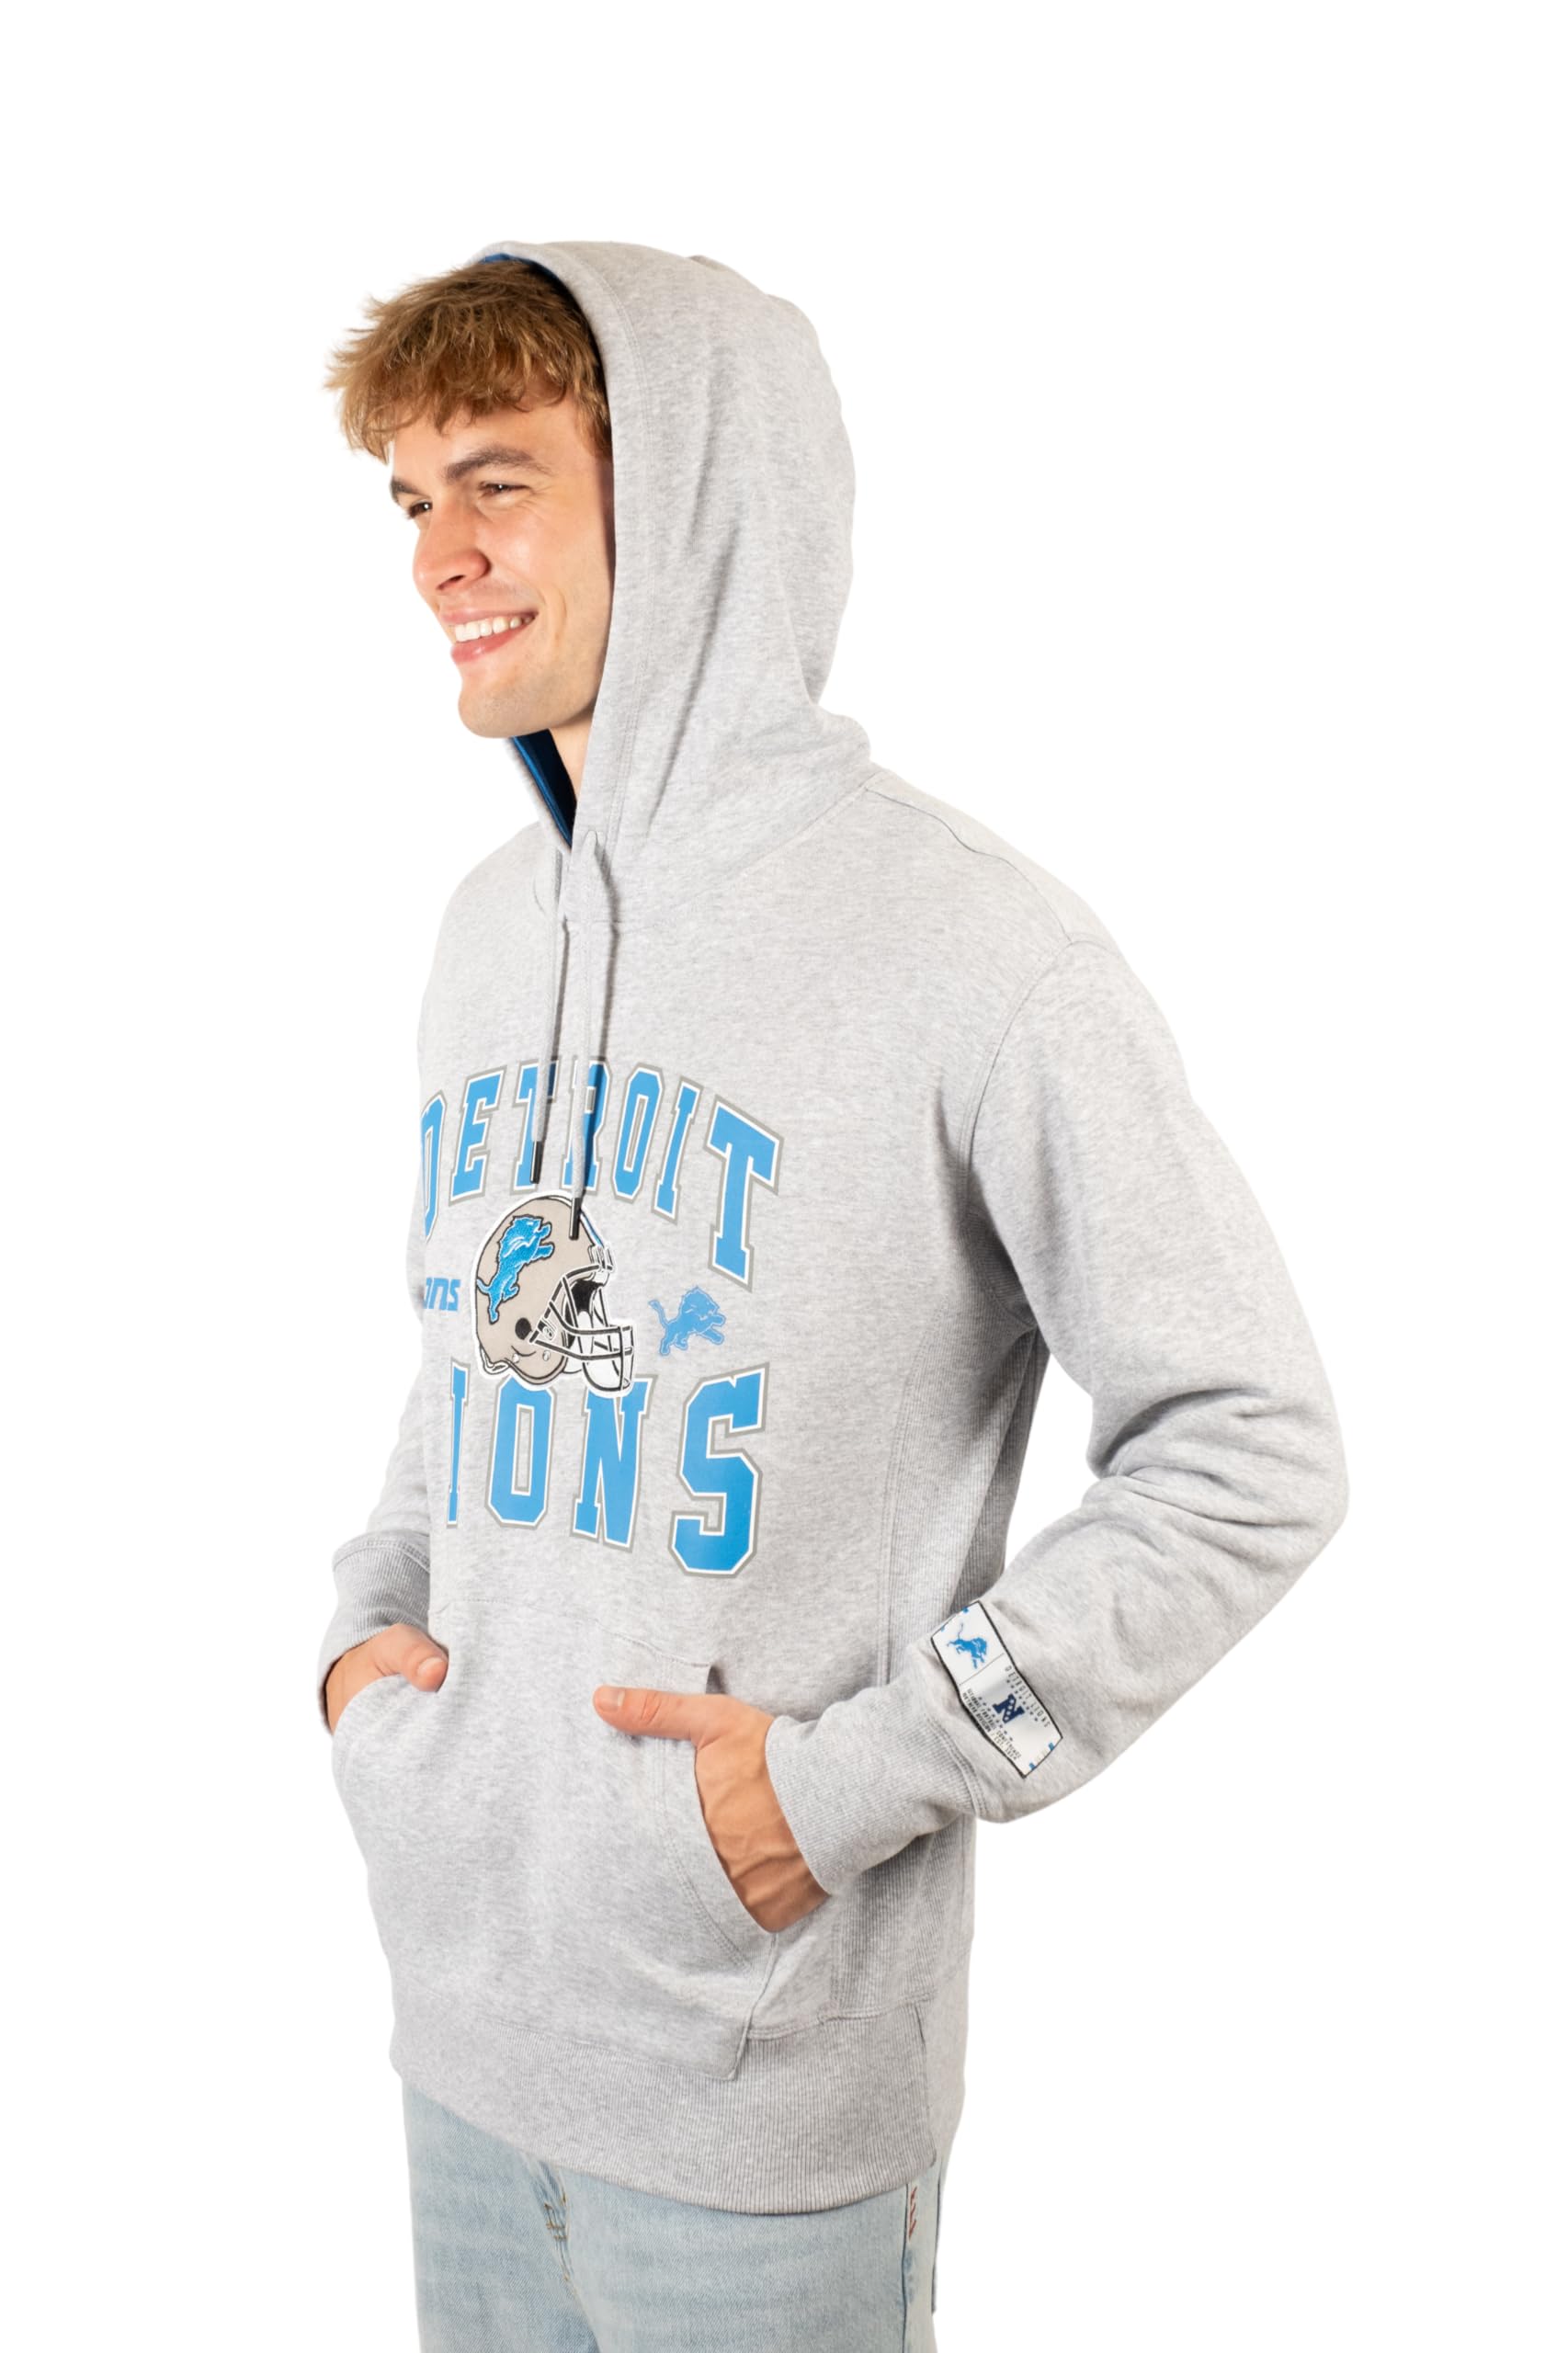 Ultra Game NFL Detroit Lions Mens Ultimate Quality Super Soft Hoodie Sweatshirt|Detroit Lions